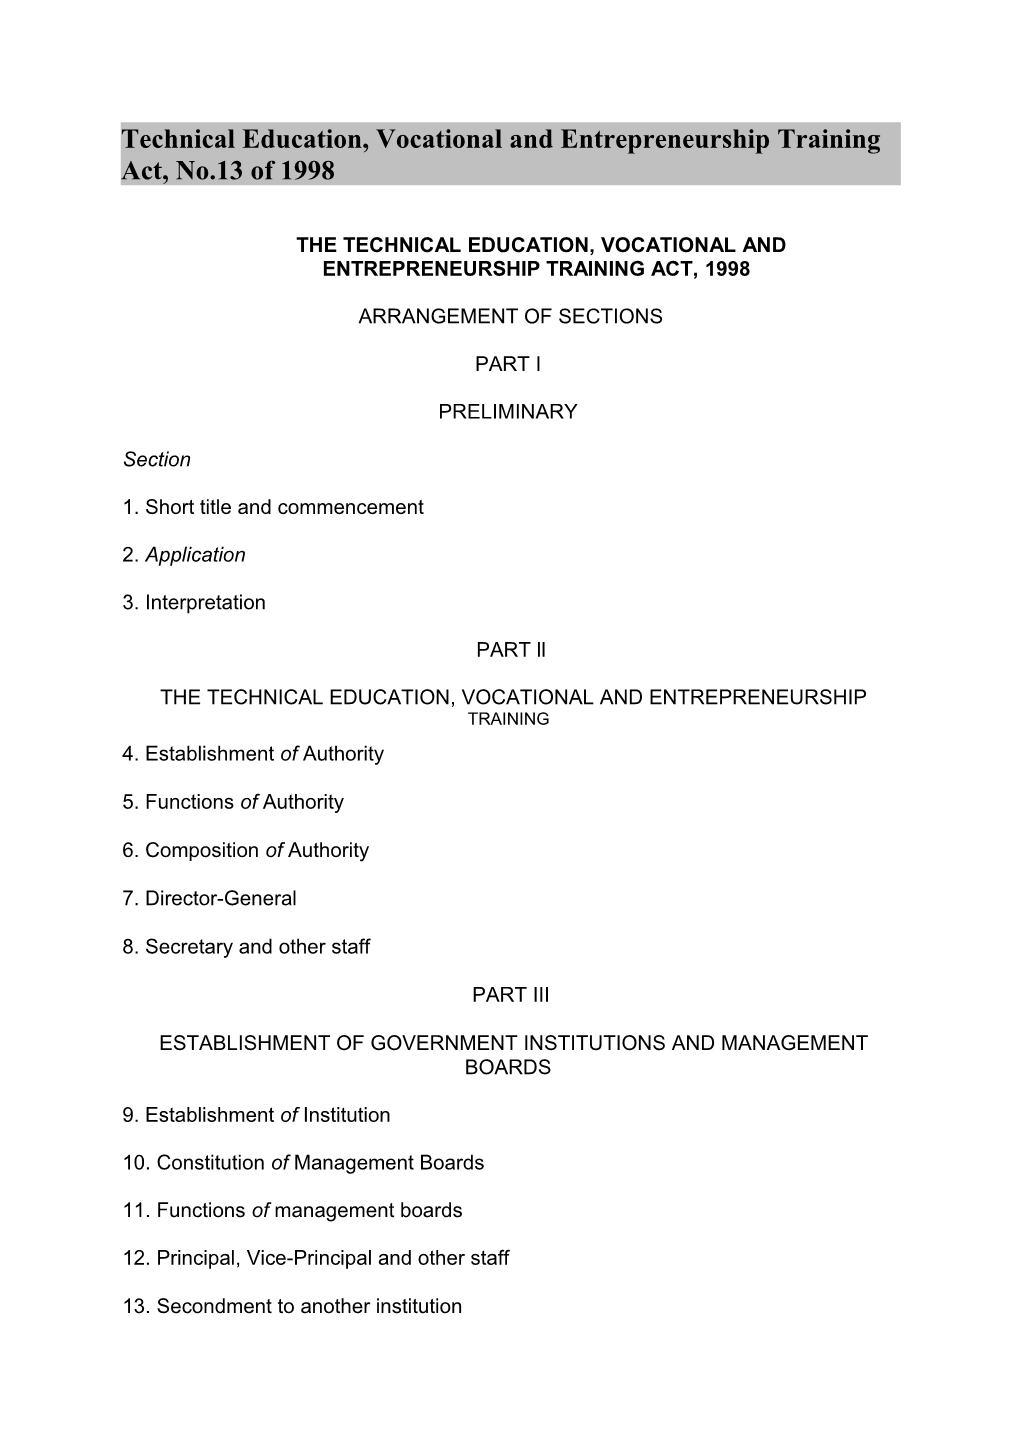 Technical Education, Vocational and Entrepreneurship Training Act, No